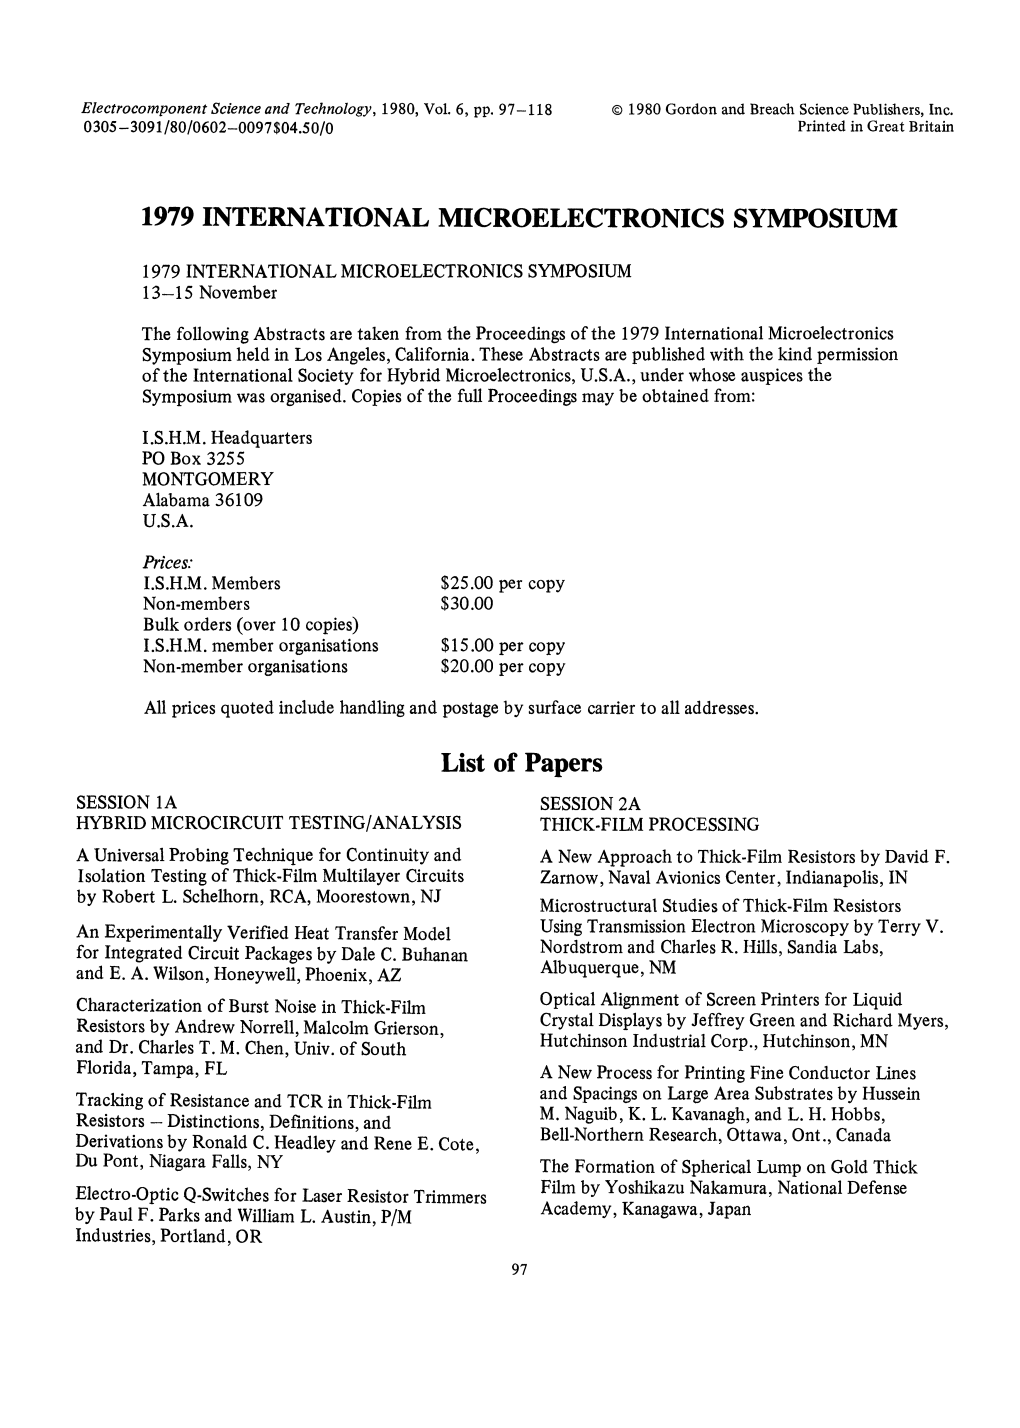 1979 International Microelectronics Symposium